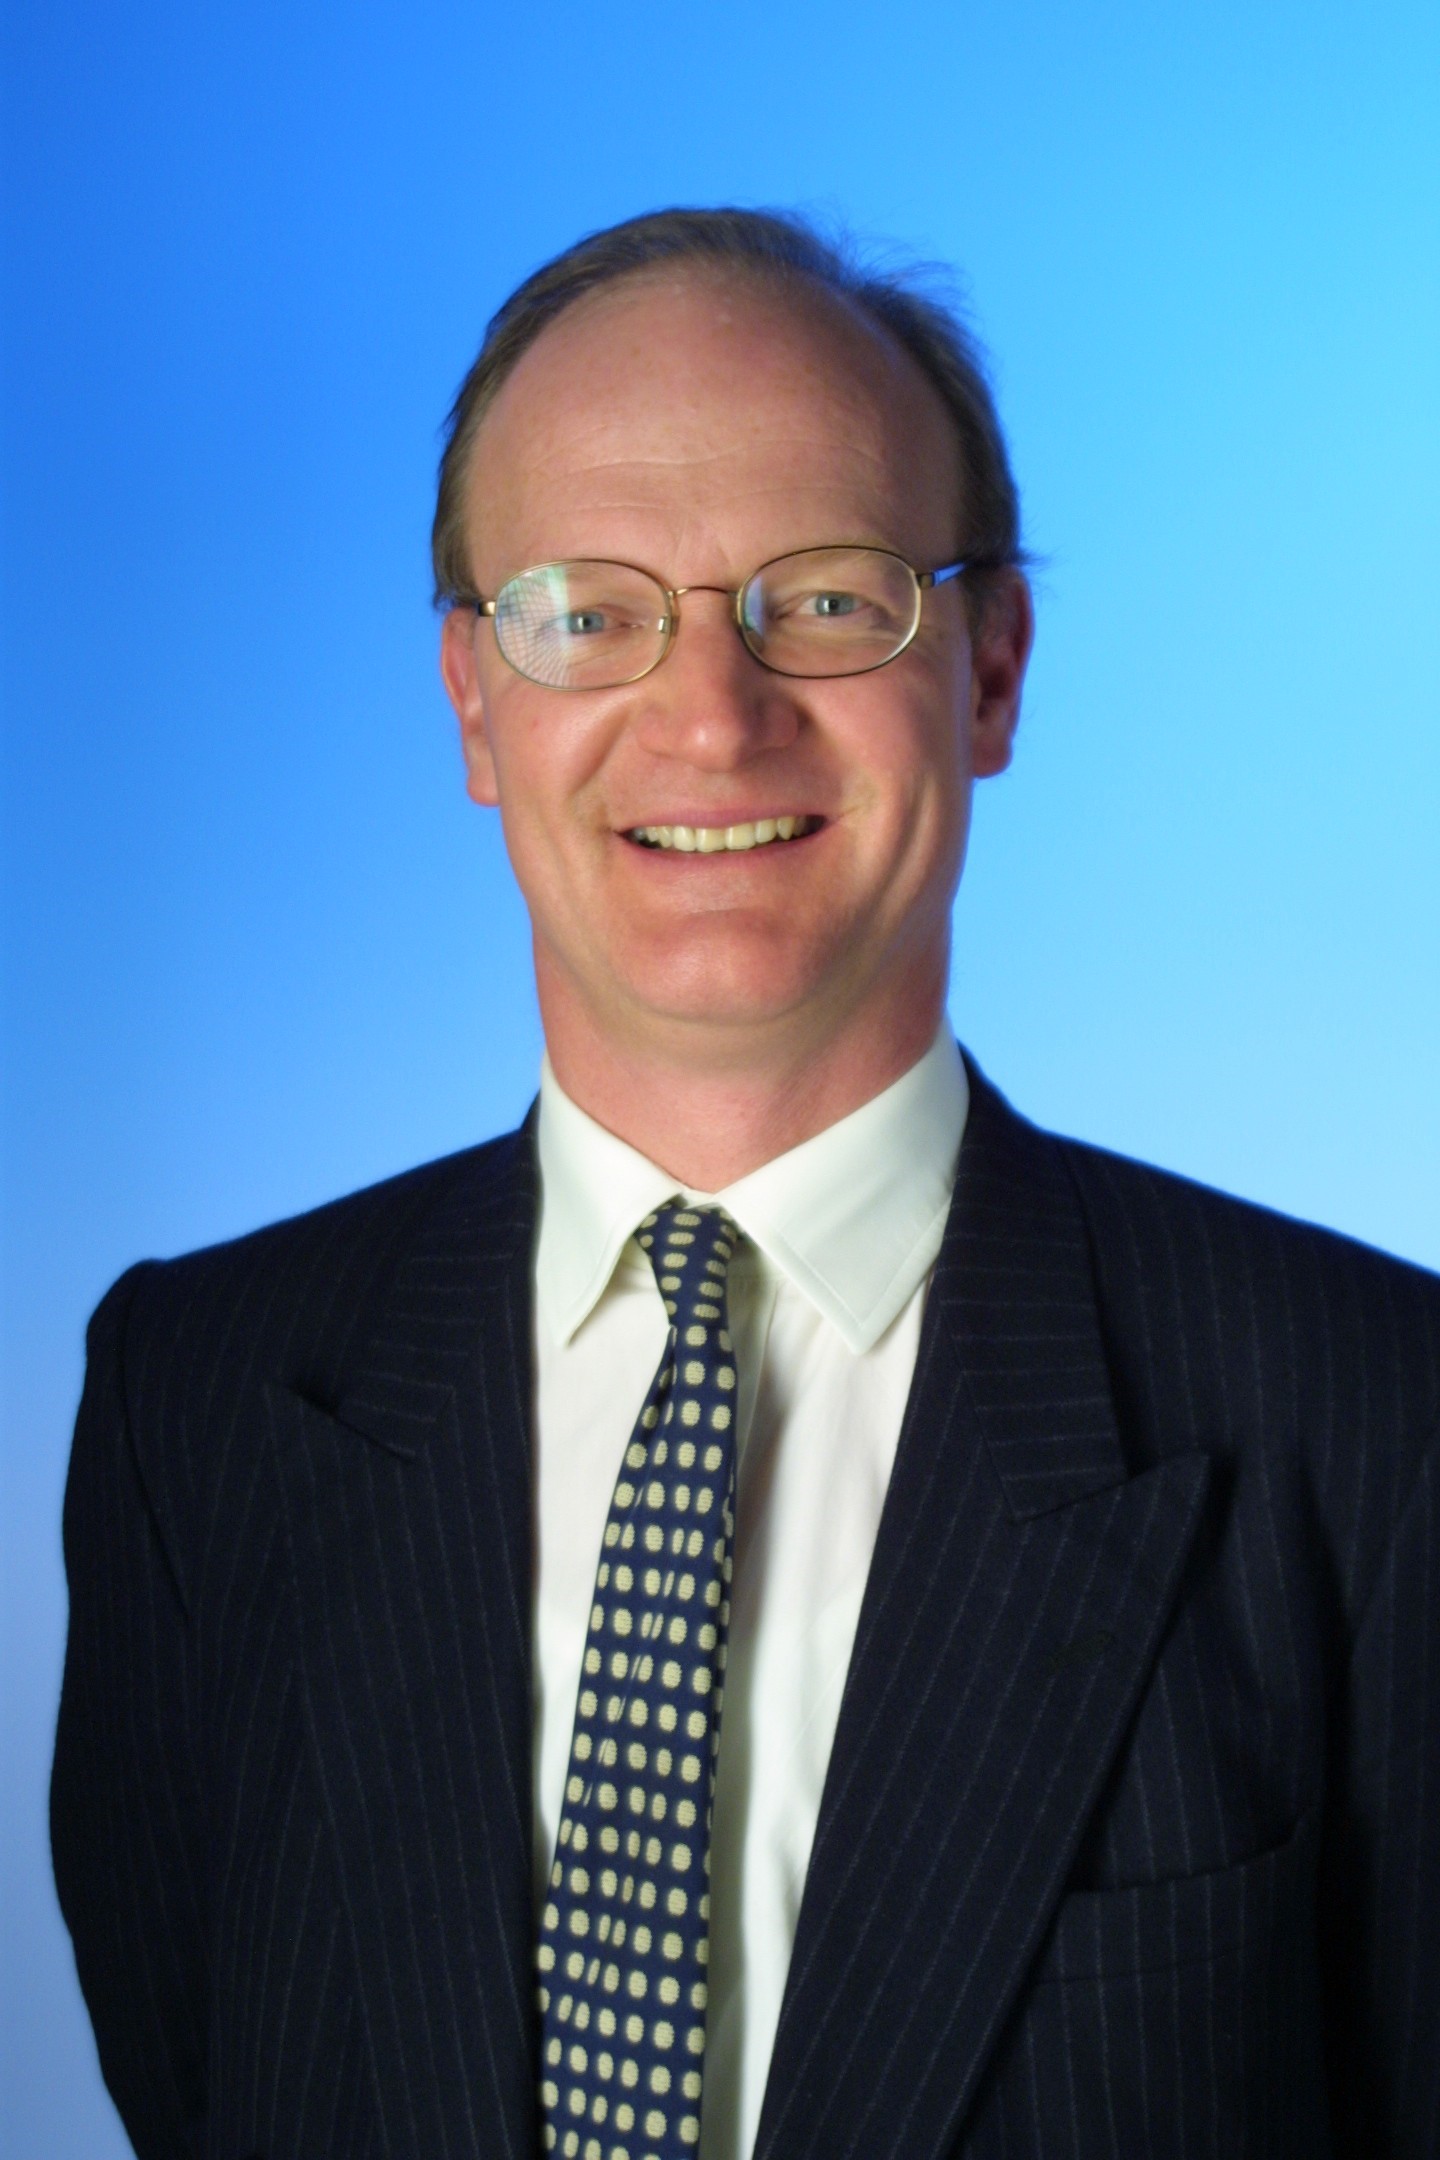 The Rt. Hon. David Willetts MP